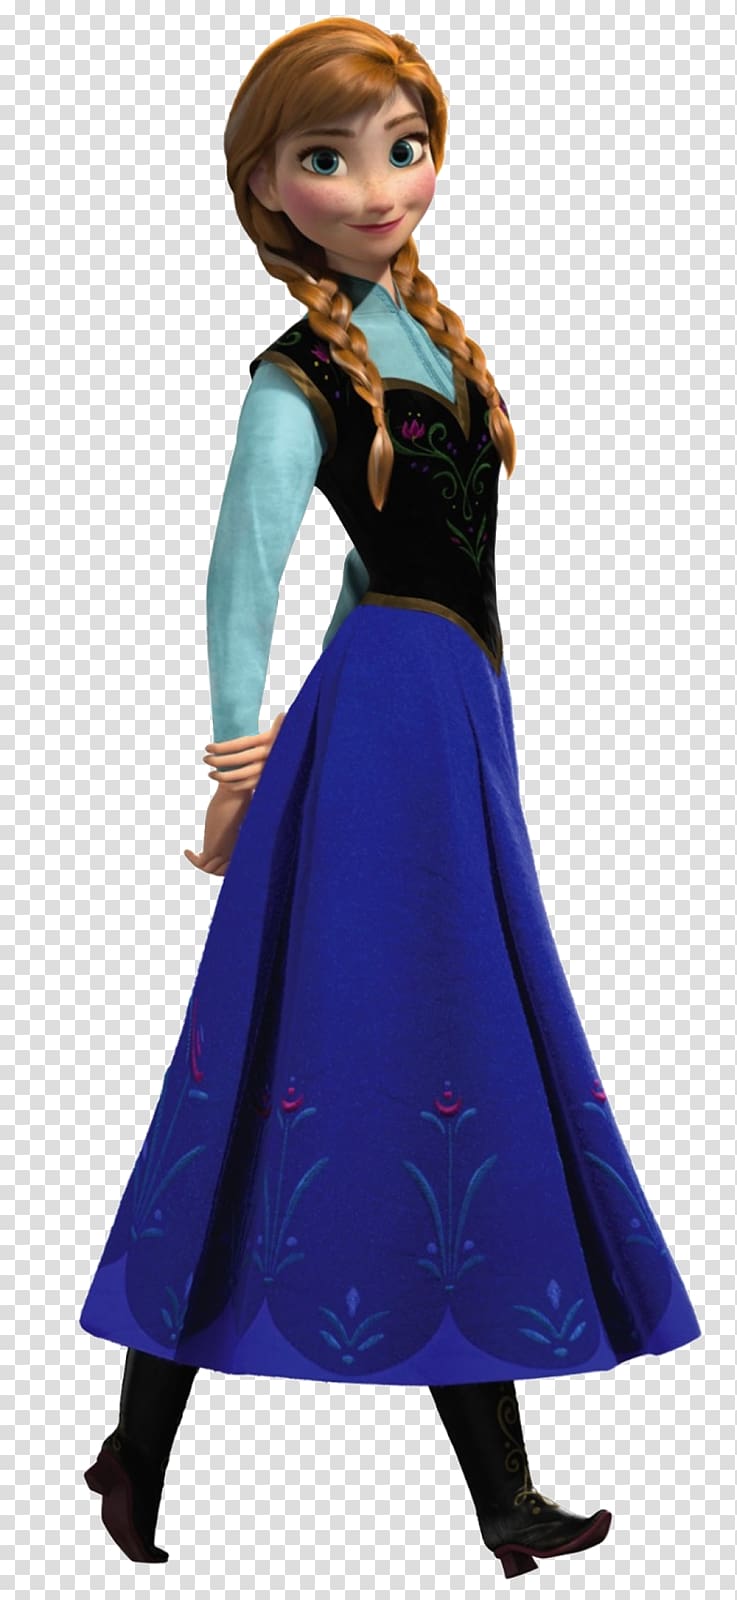 Disney Frozen Anna Elsa Kristoff Anna Frozen Olaf Elsa Transparent Background Png Clipart Hiclipart